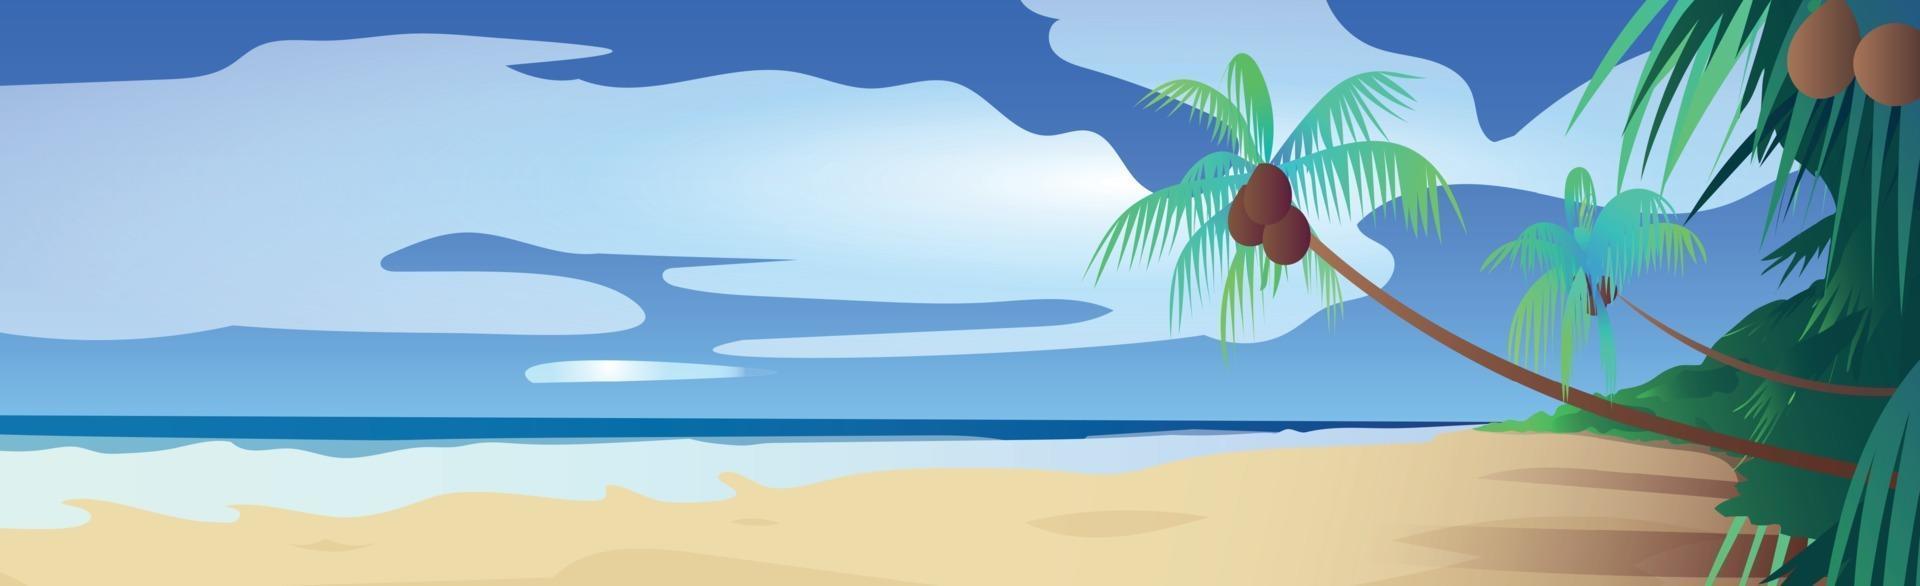 paesaggio panoramico soleggiata spiaggia di sabbia luminosa - vettore